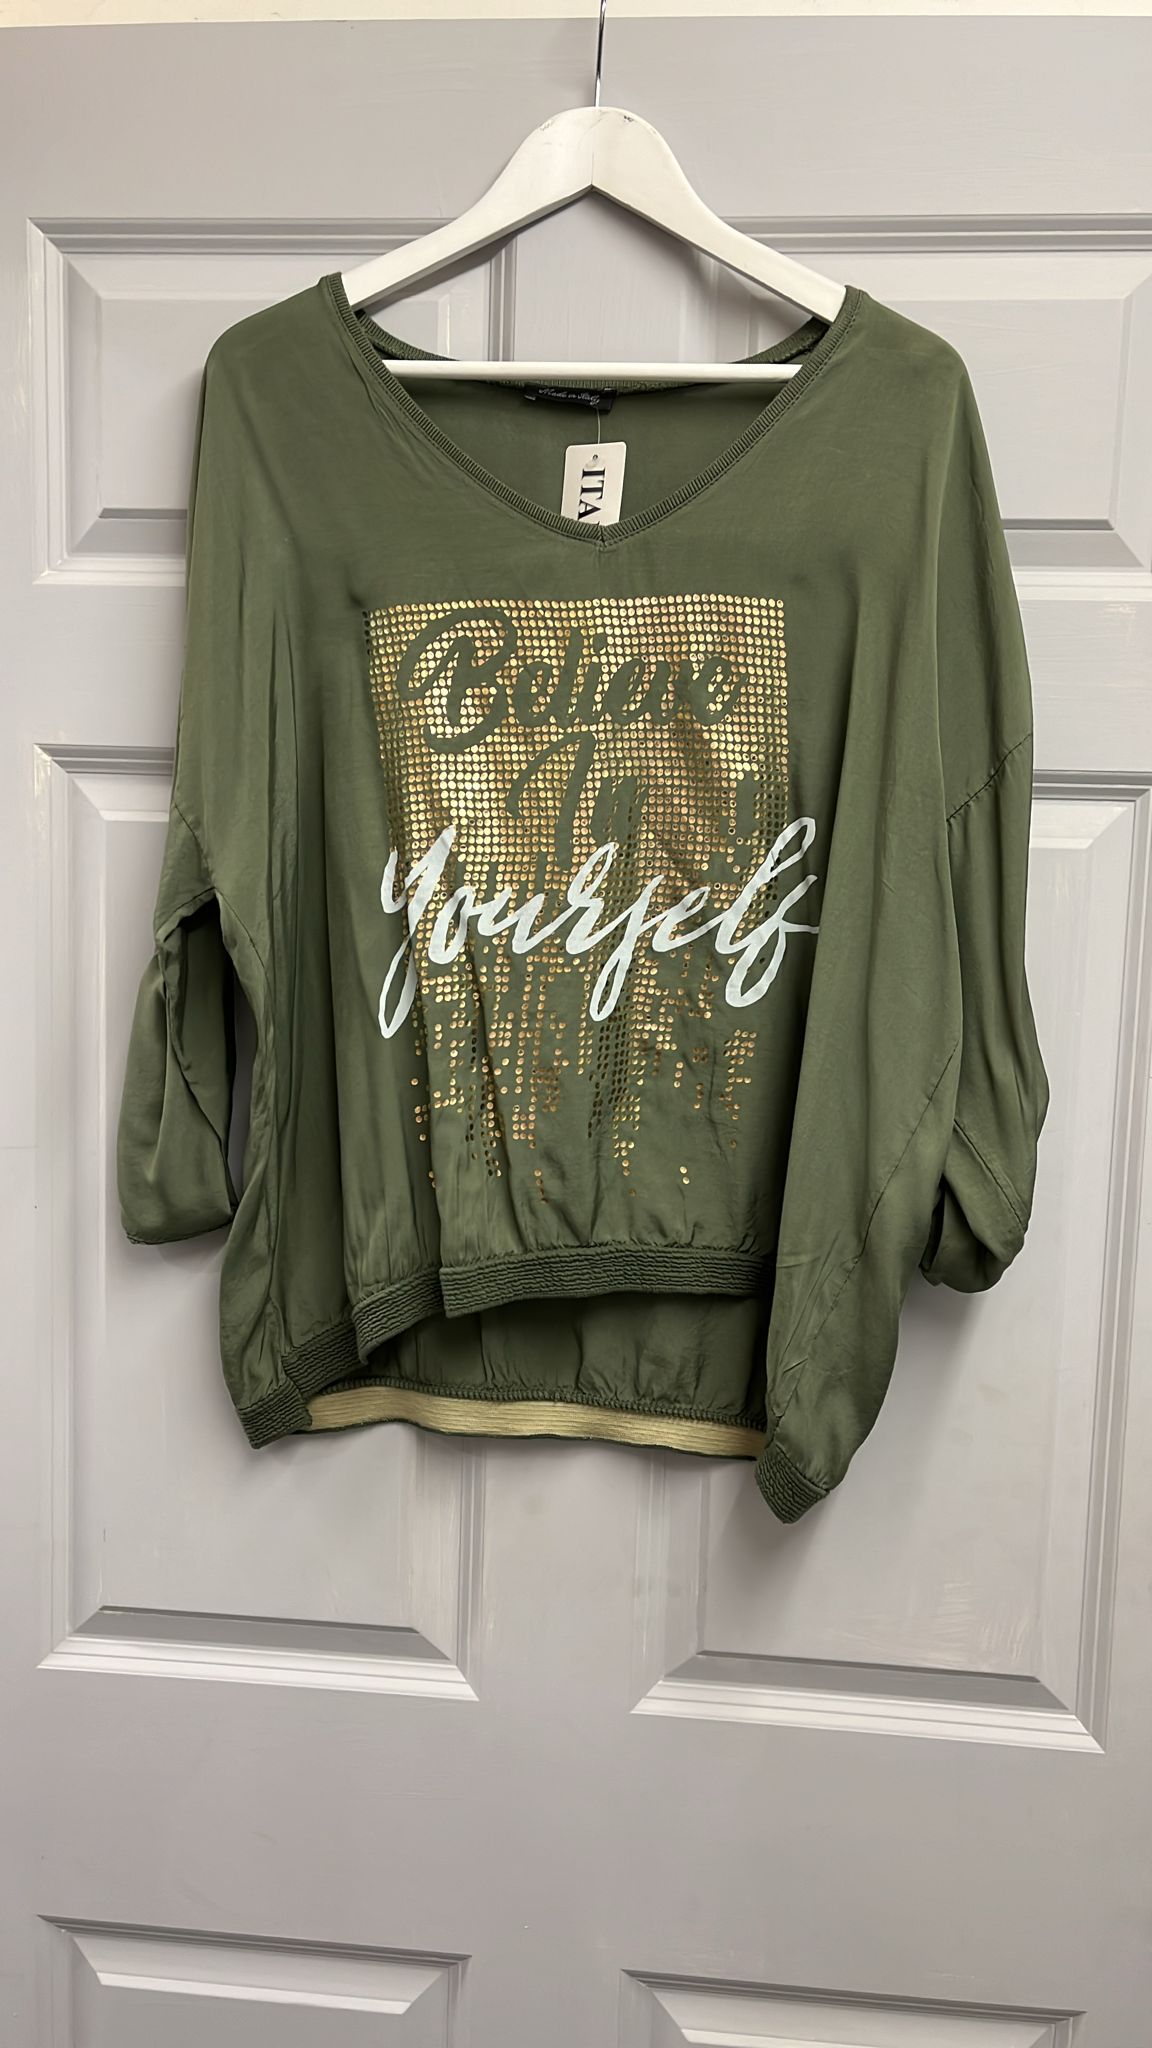 Kyla Believe in Yourself top-Green